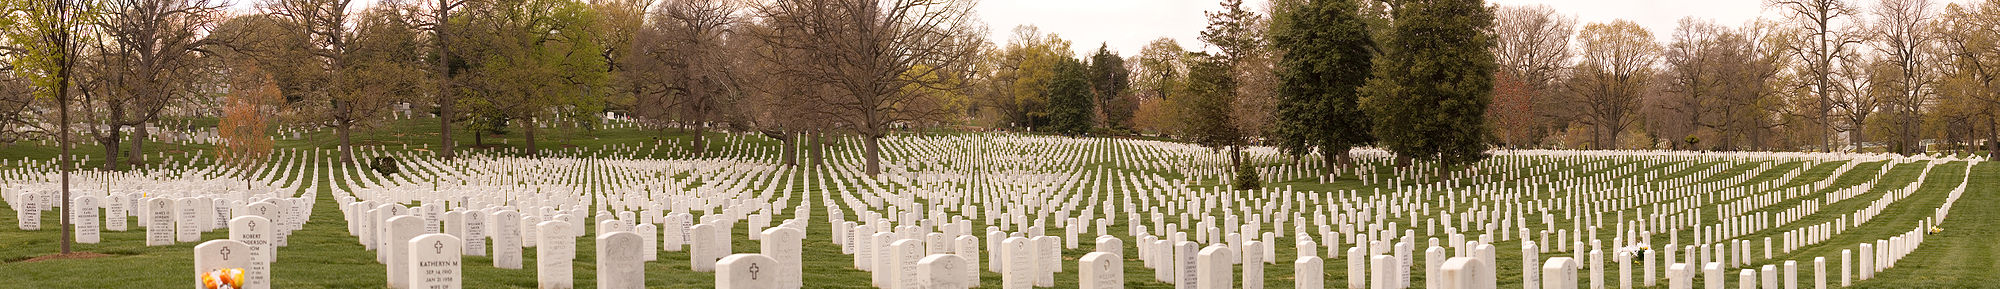 Panorama einer Sektion des Arlington National Cementery.